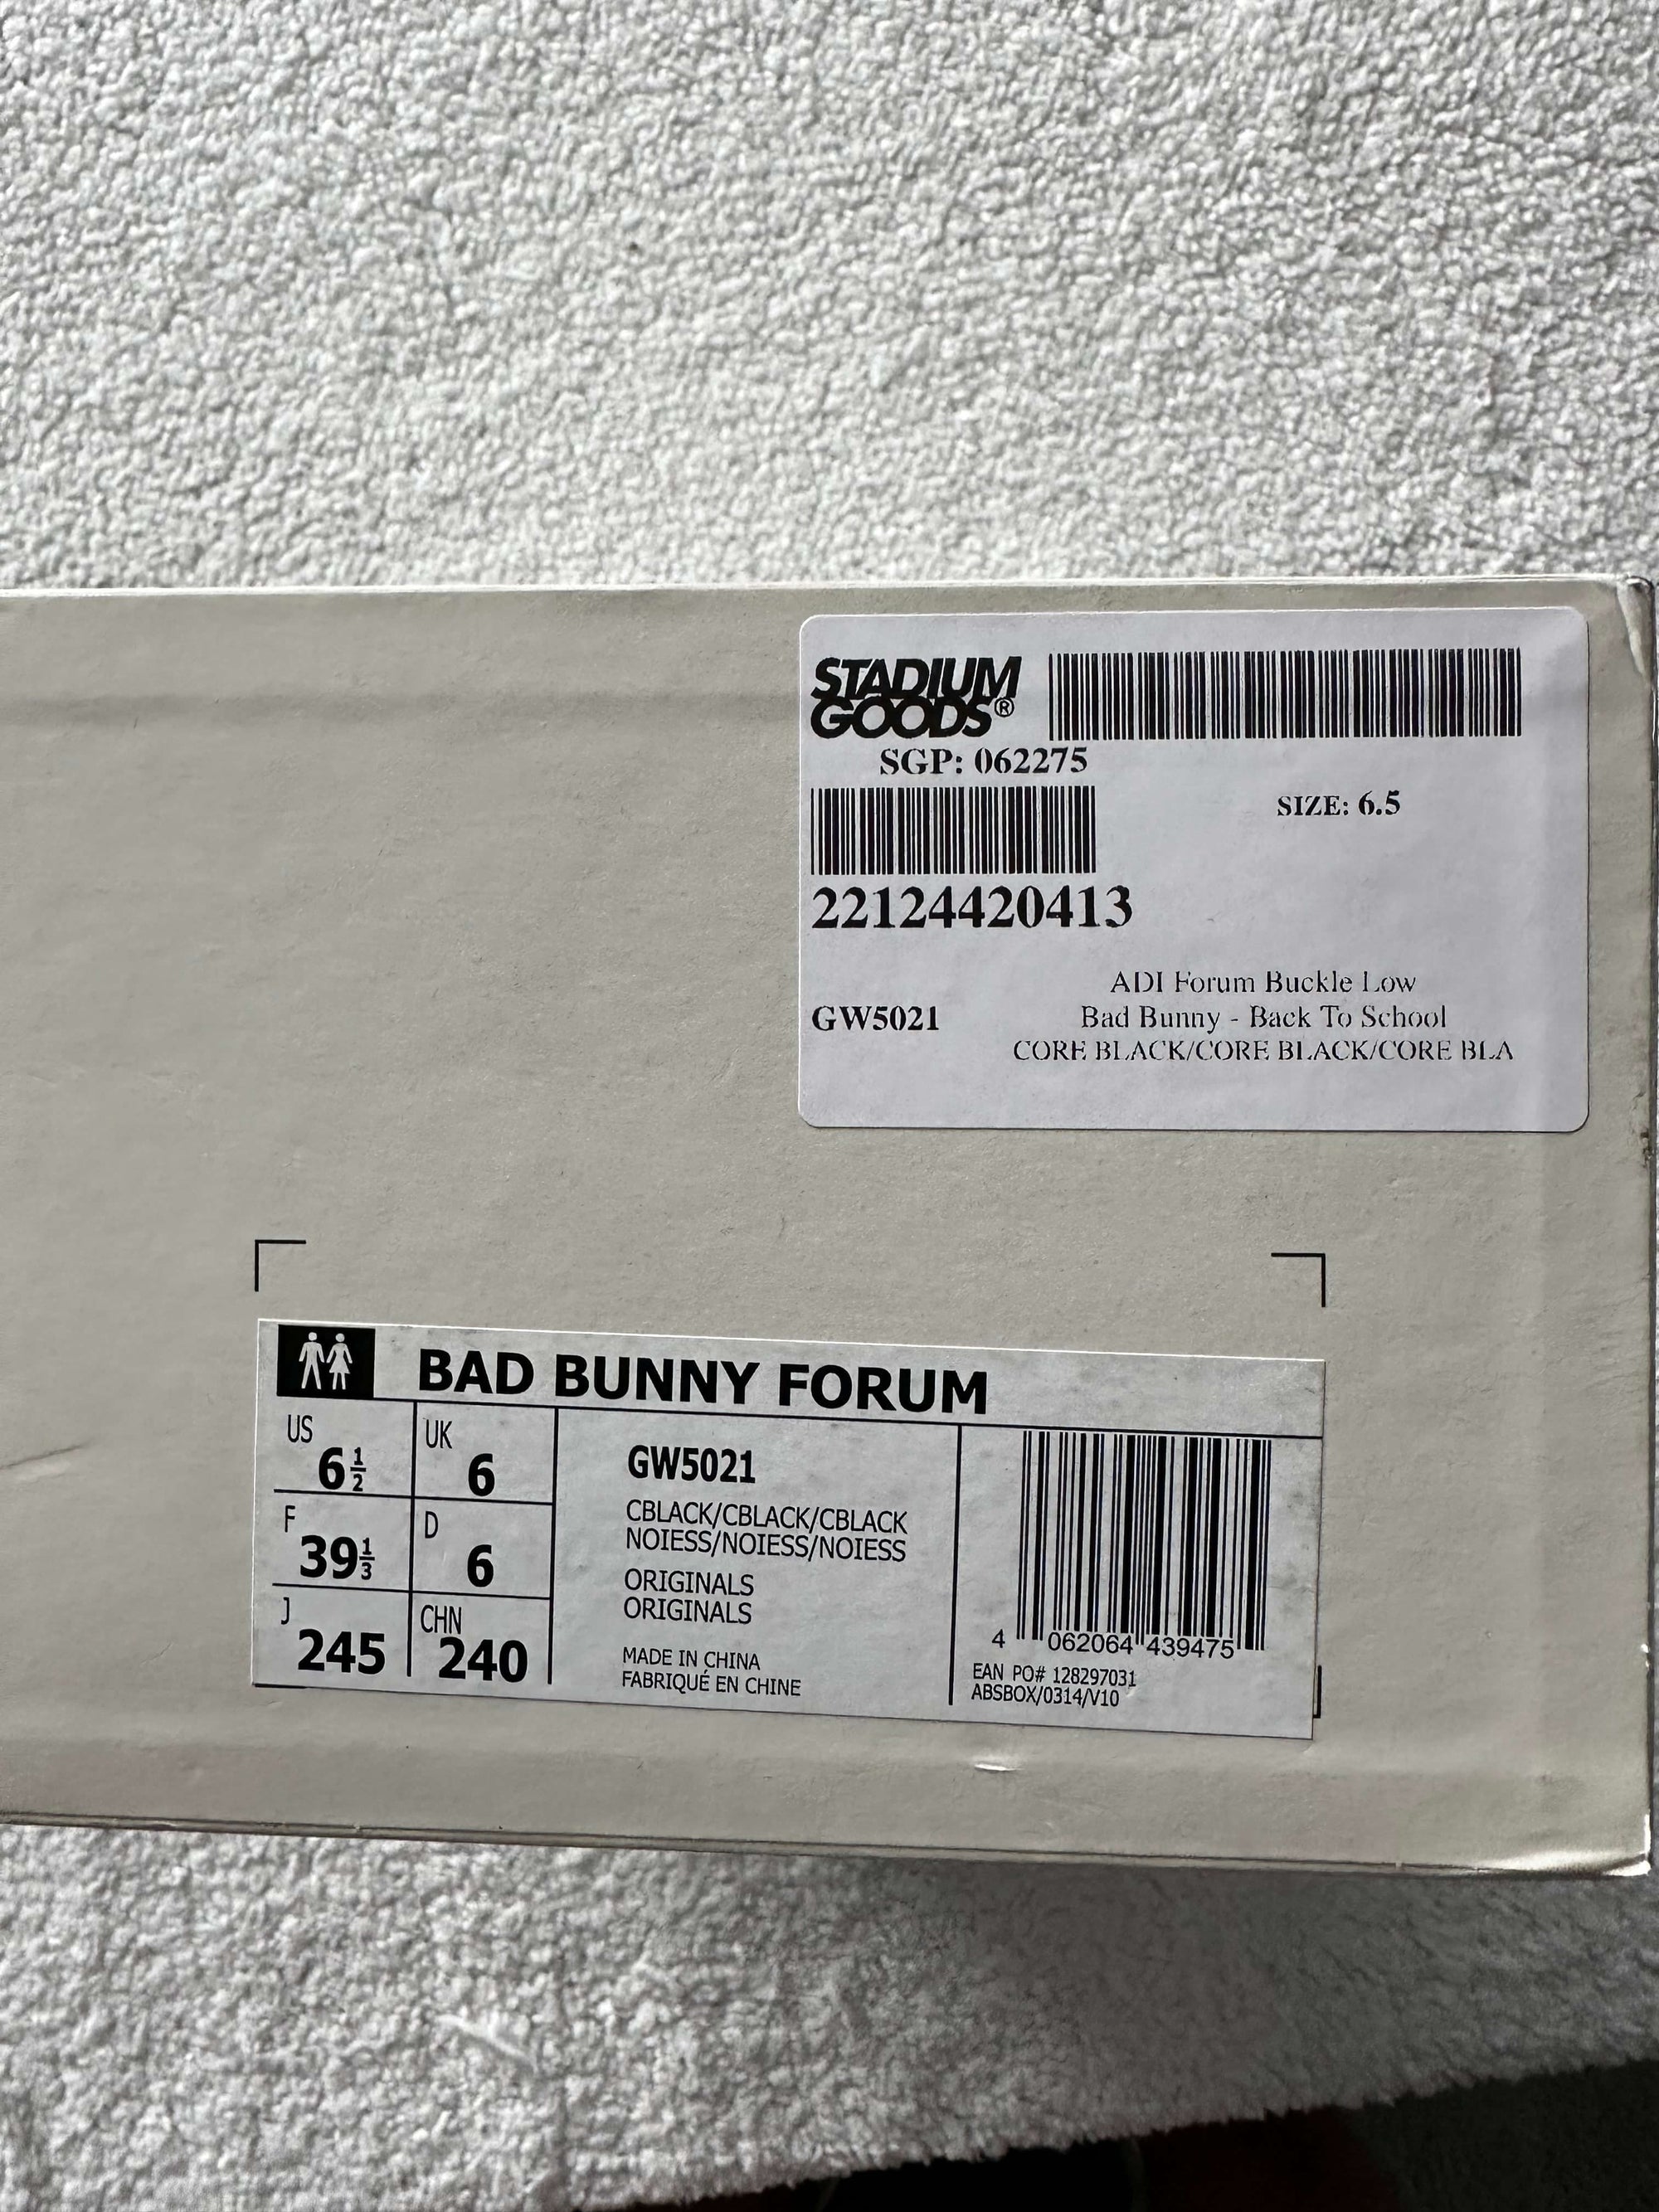 Sneakers Adidas Forum Buckle Low Bad Bunny.